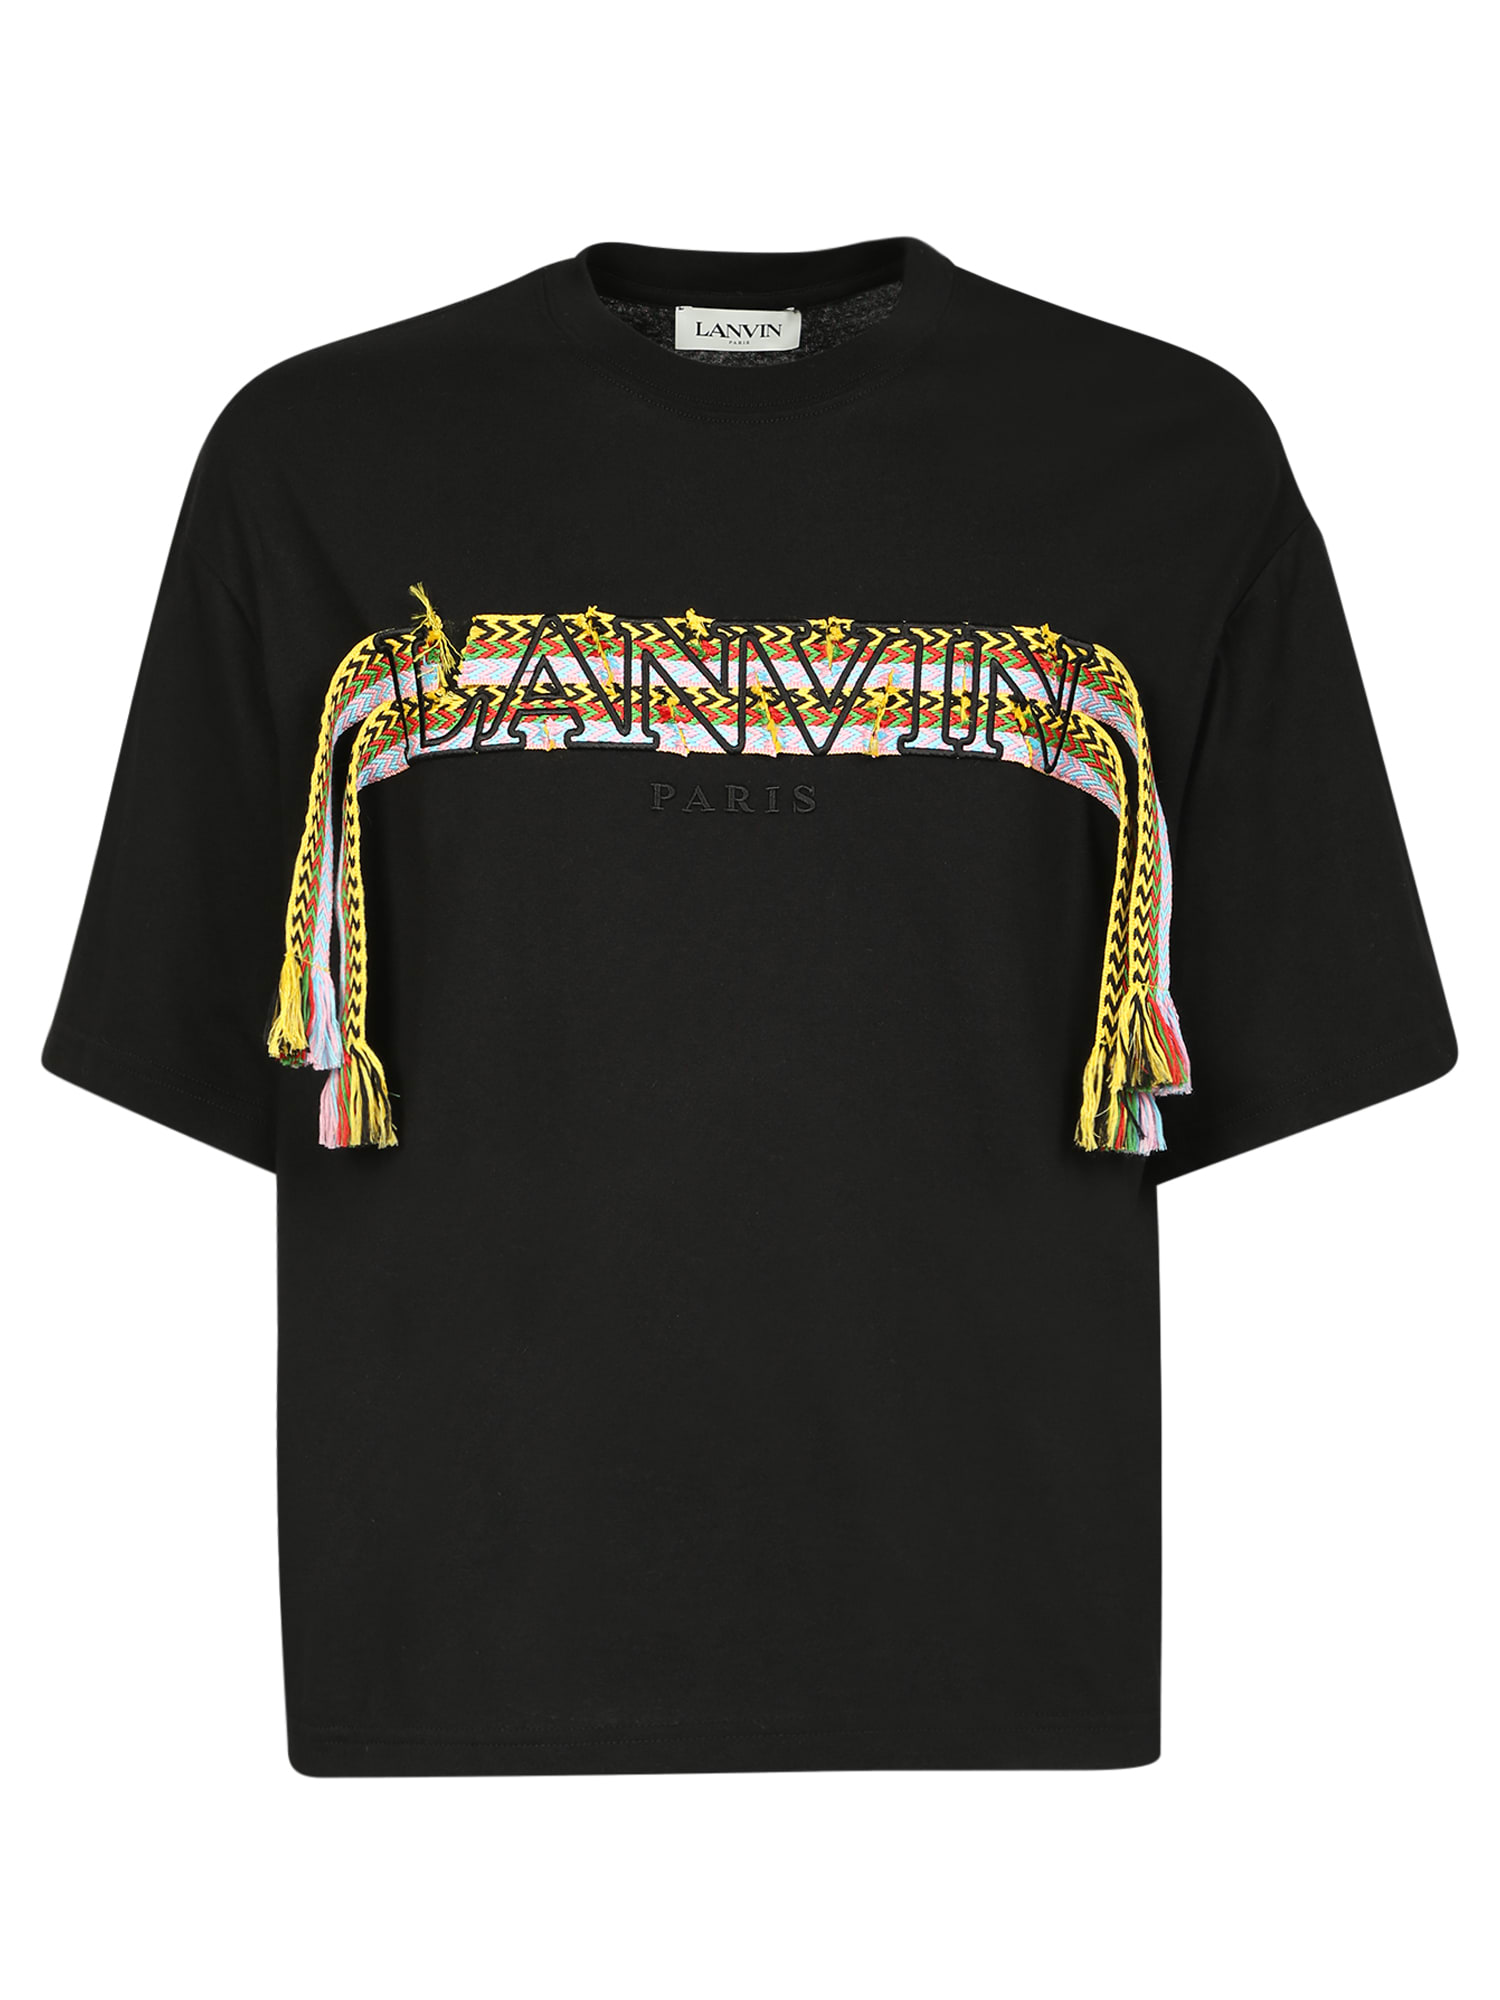 Lanvin Classic T-shirt Embellished With Ribbon Appliqu?